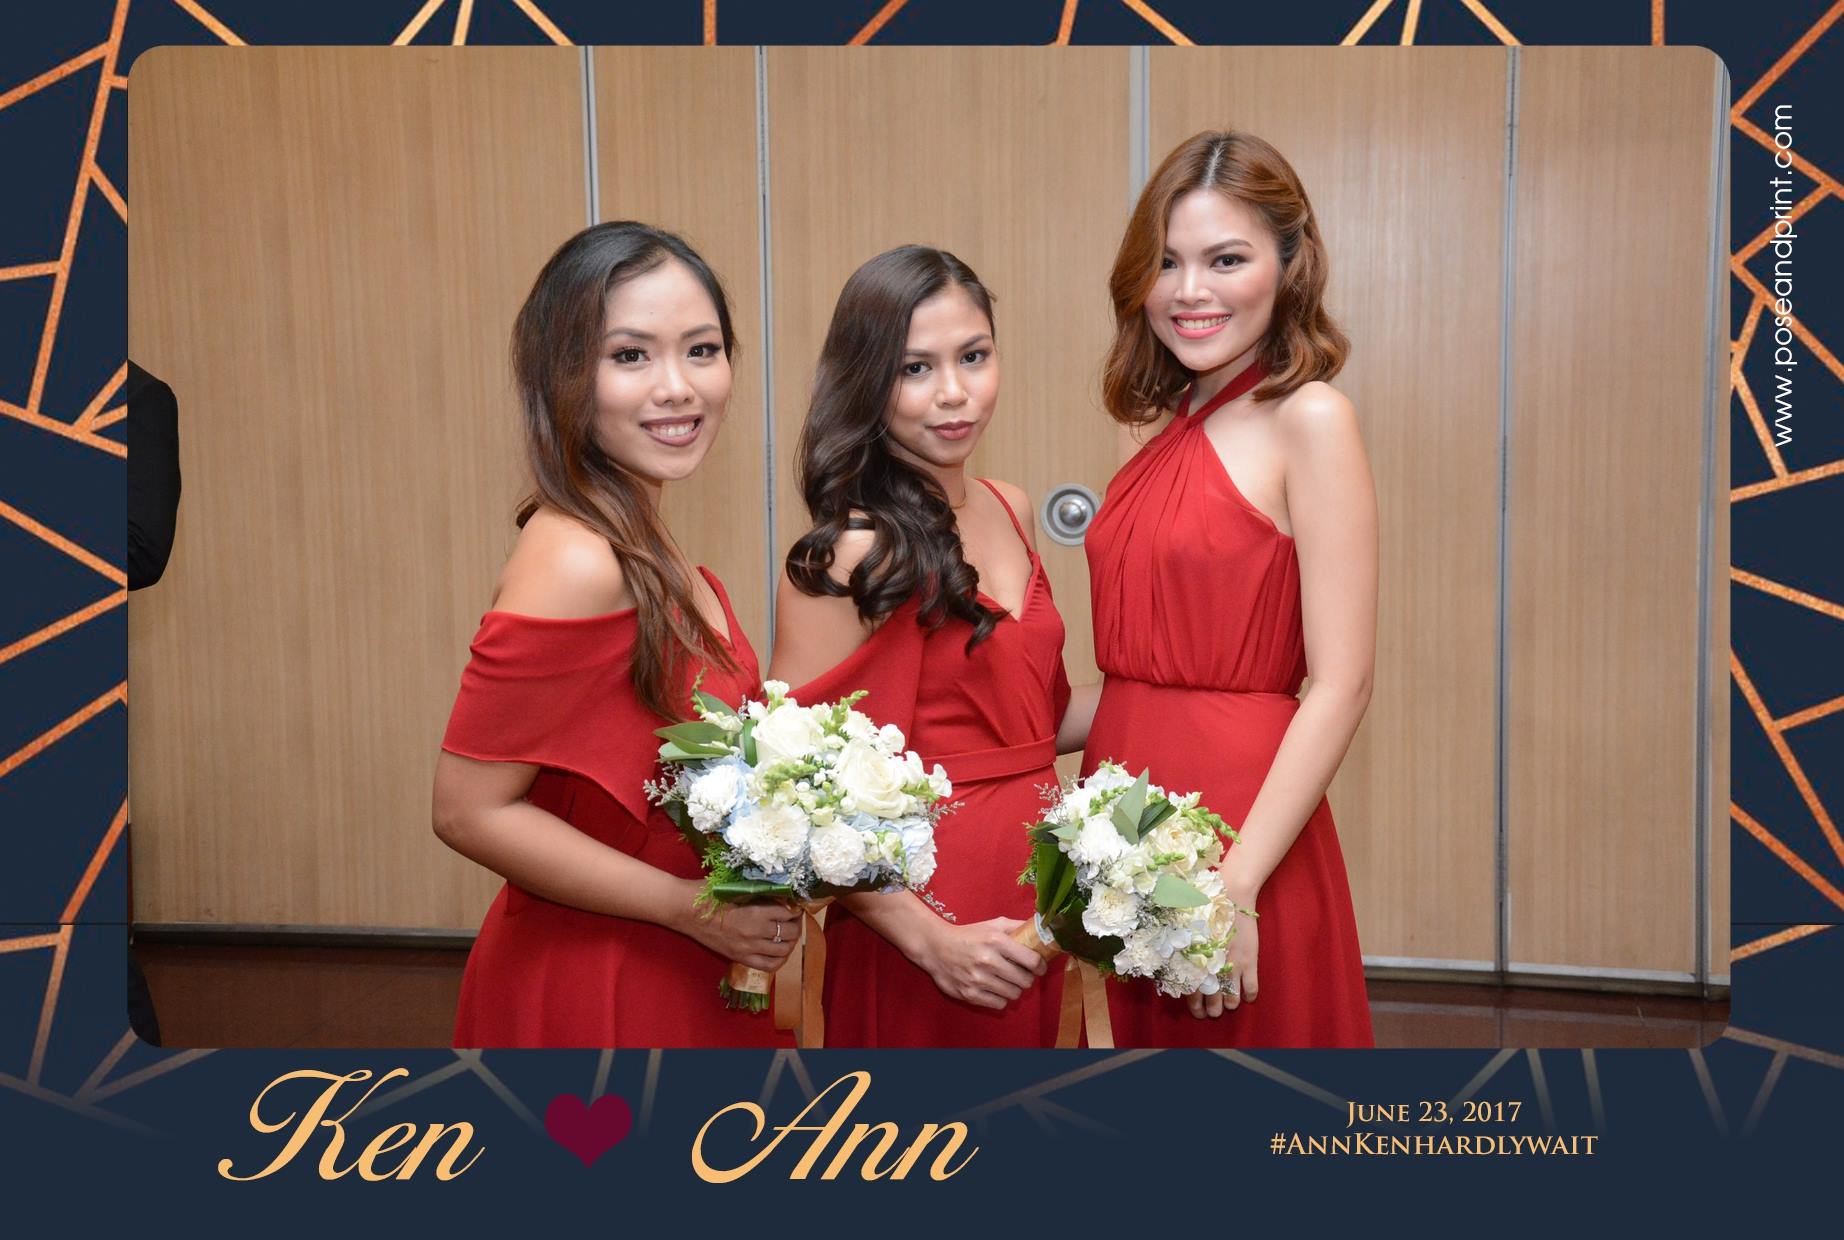 Ken and Ann’s Wedding – Photoman 1